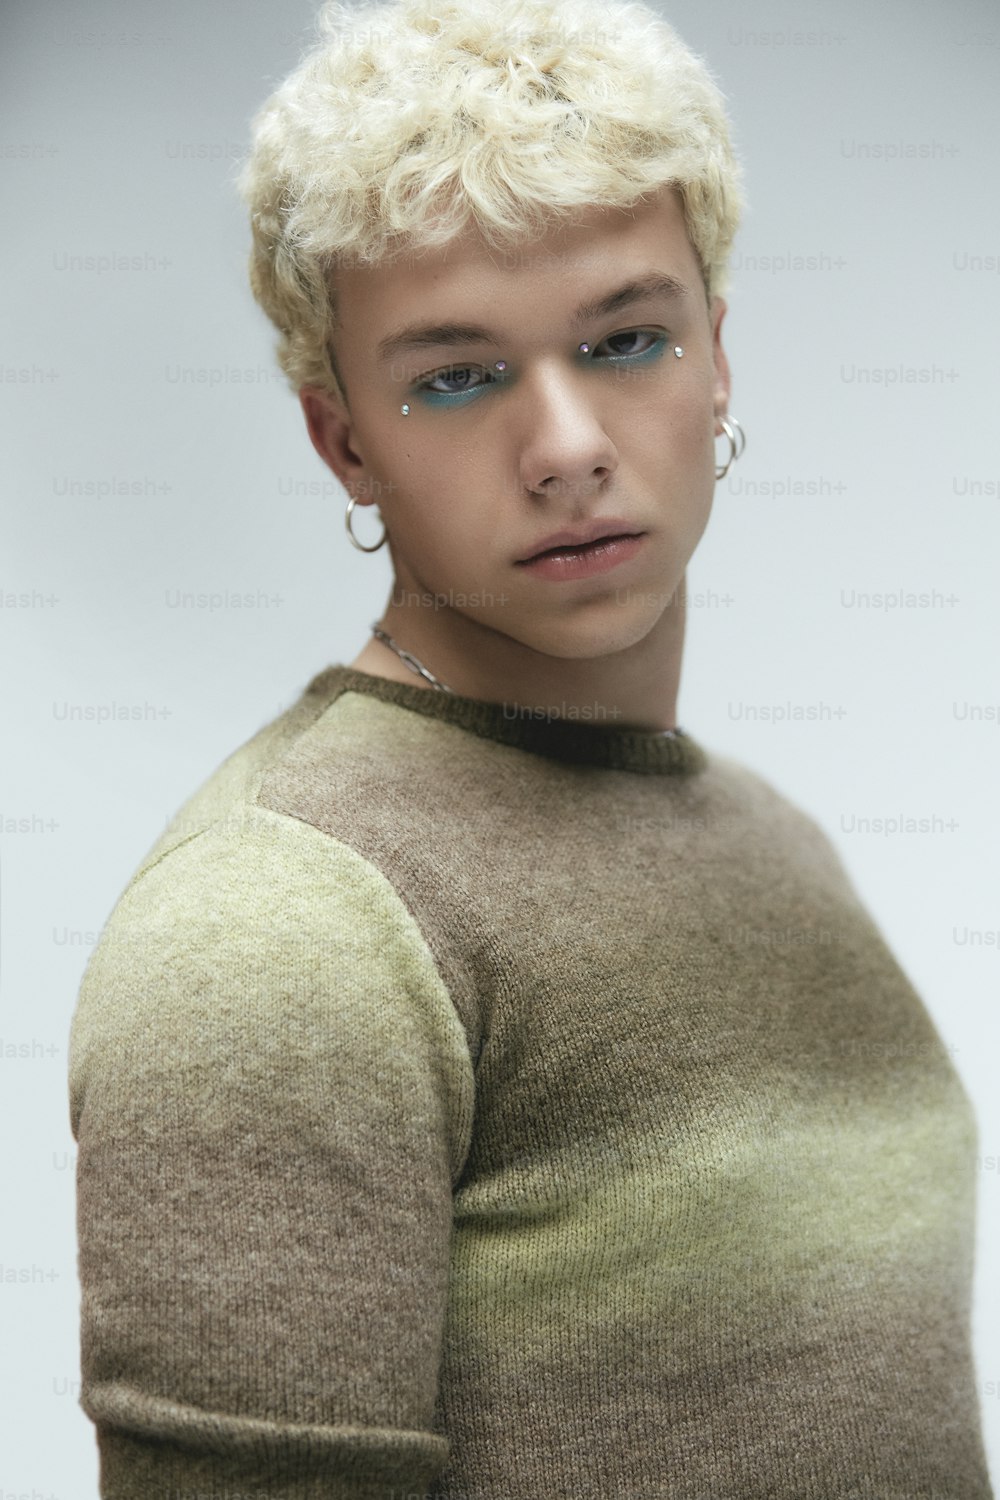 Un joven con cabello rubio con un suéter